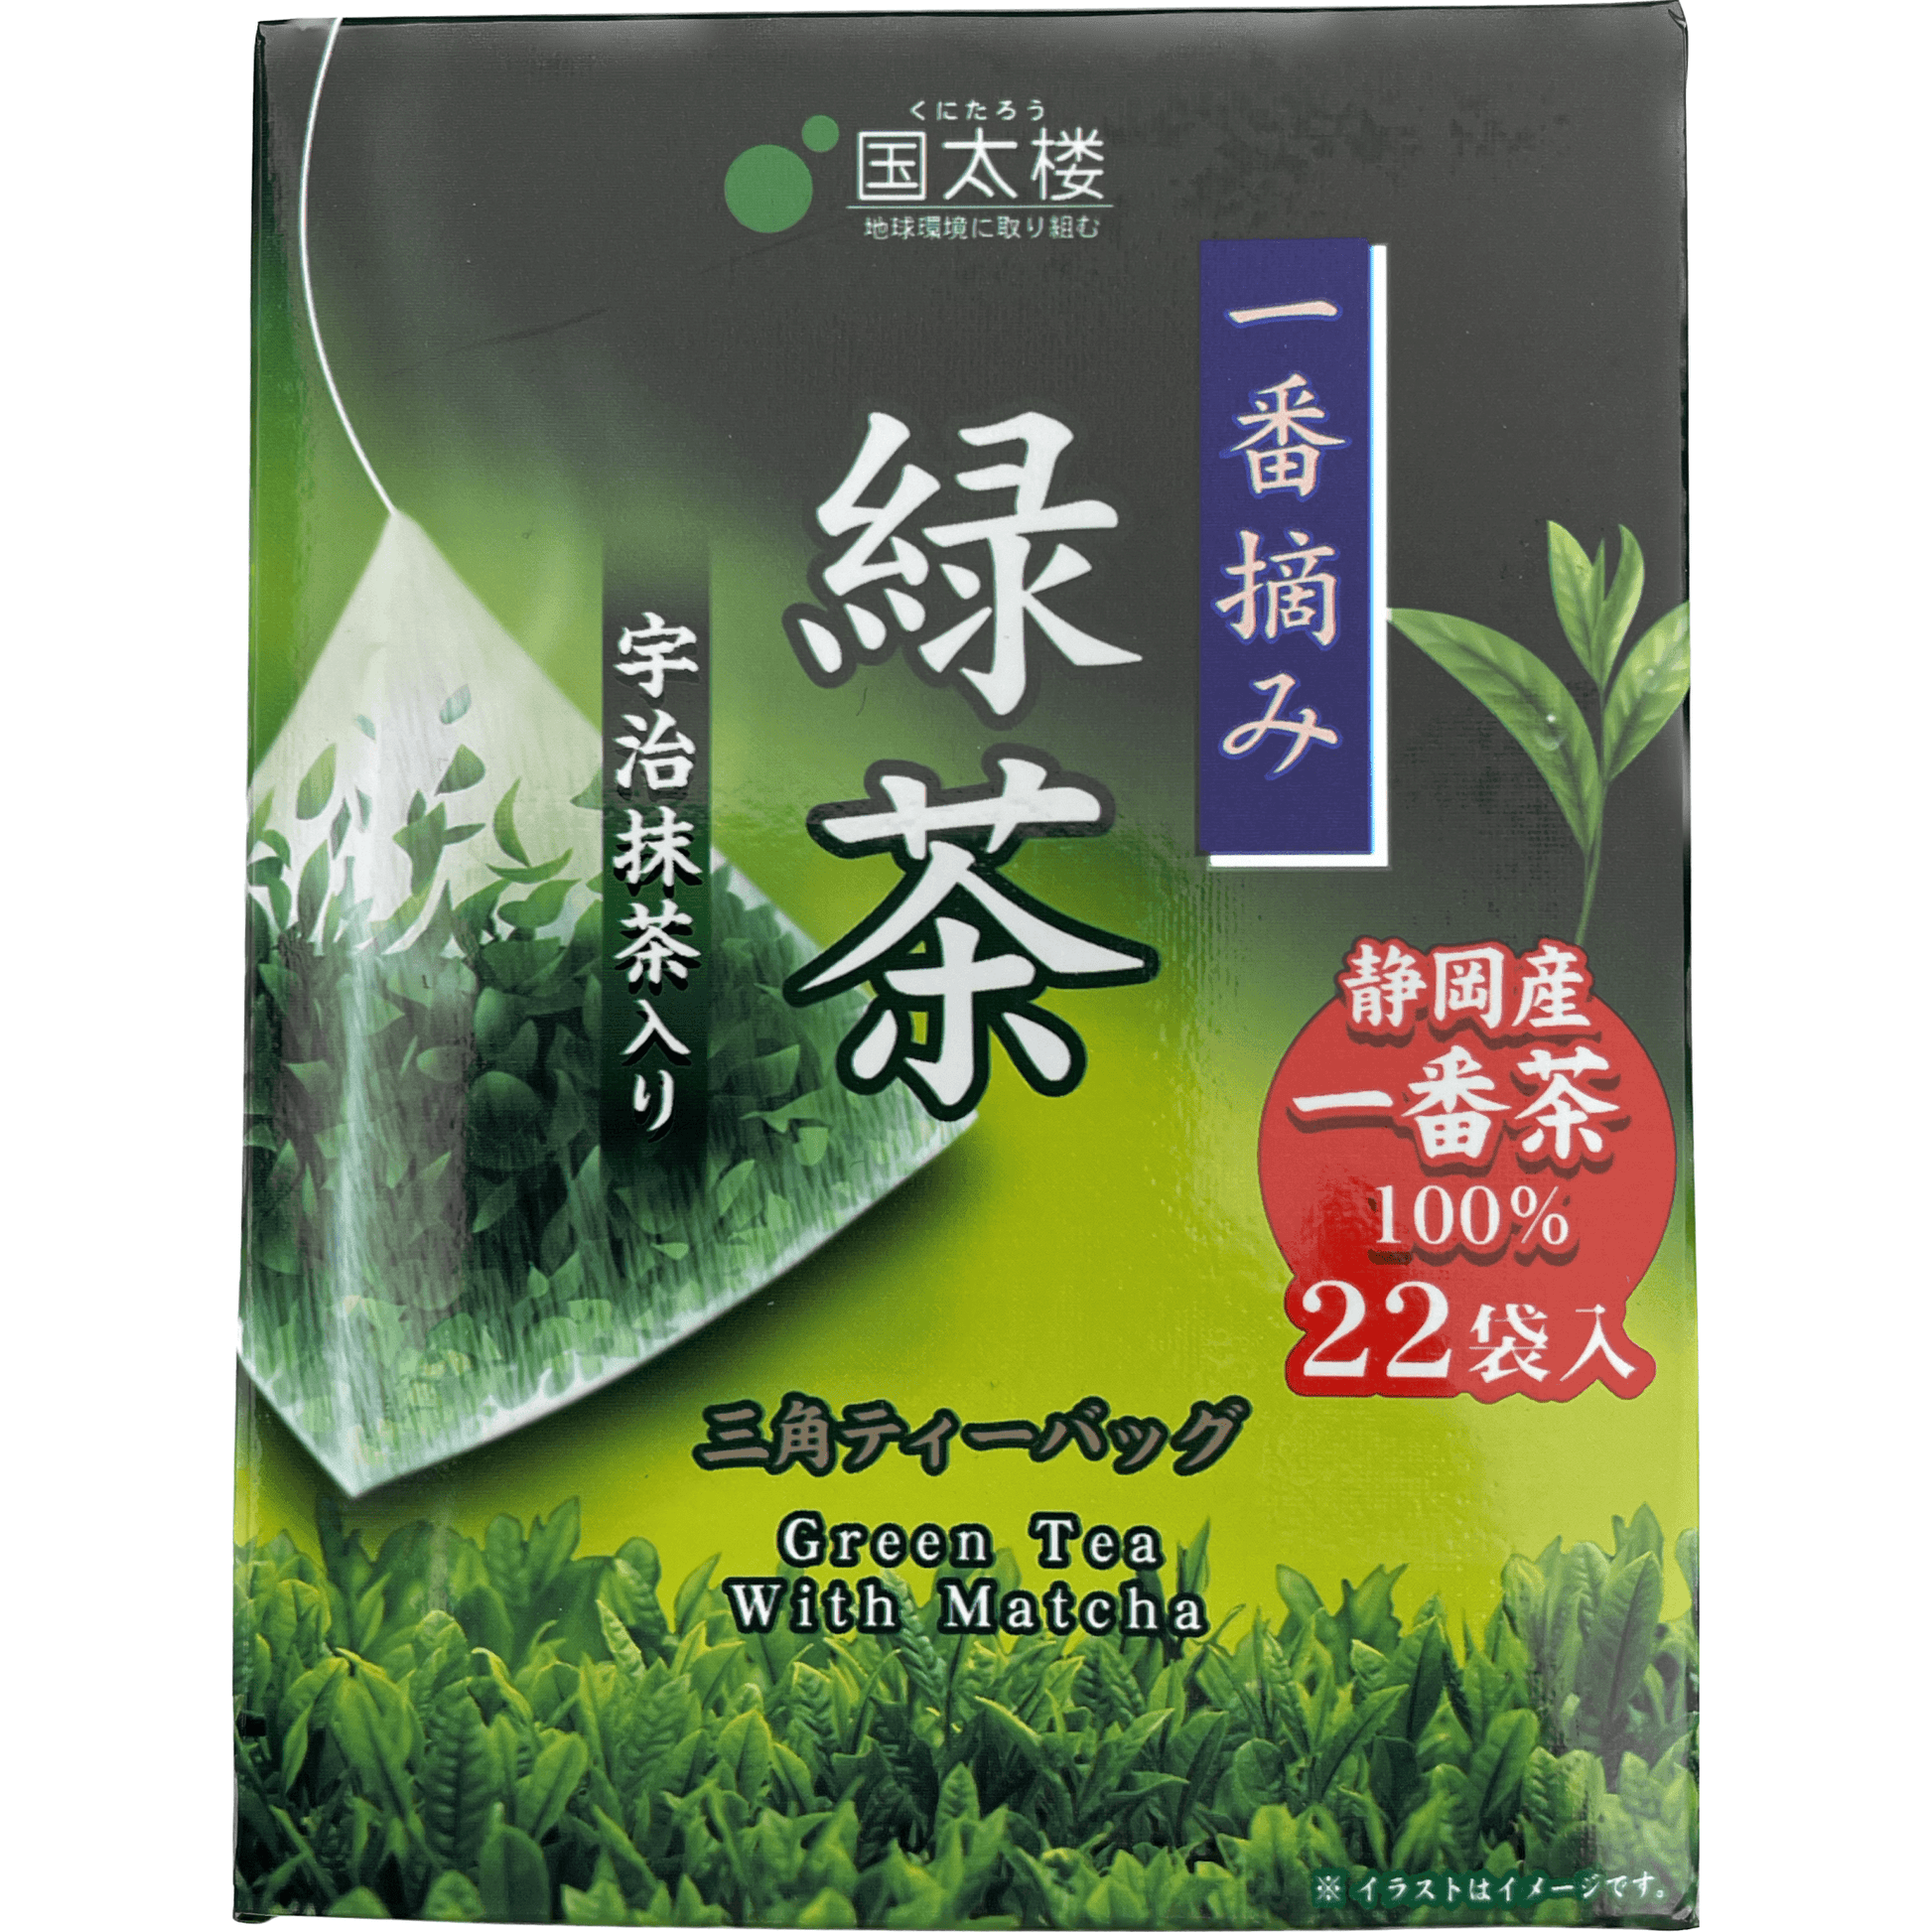 Kunitaro Ichiban-tsumi Green Tea with Uji Matcha Tea Bag 22 Bags国太楼　一番摘み　宇治抹茶入り緑茶　ティーバック22袋 - RiceWineShop